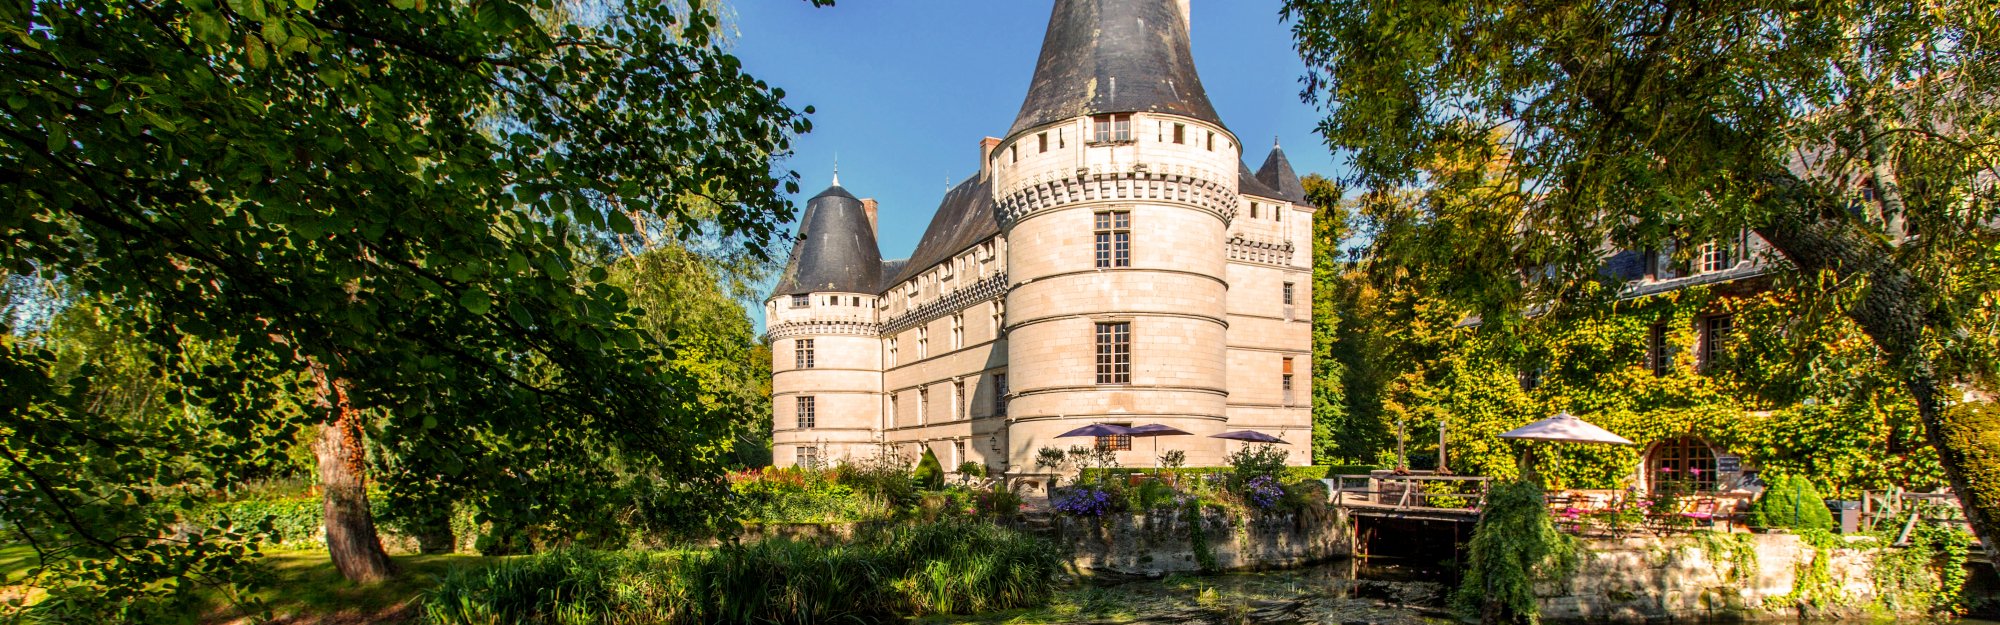 Chateau de l'Islette, one of the Loire Valley castles near Azay le Rideau